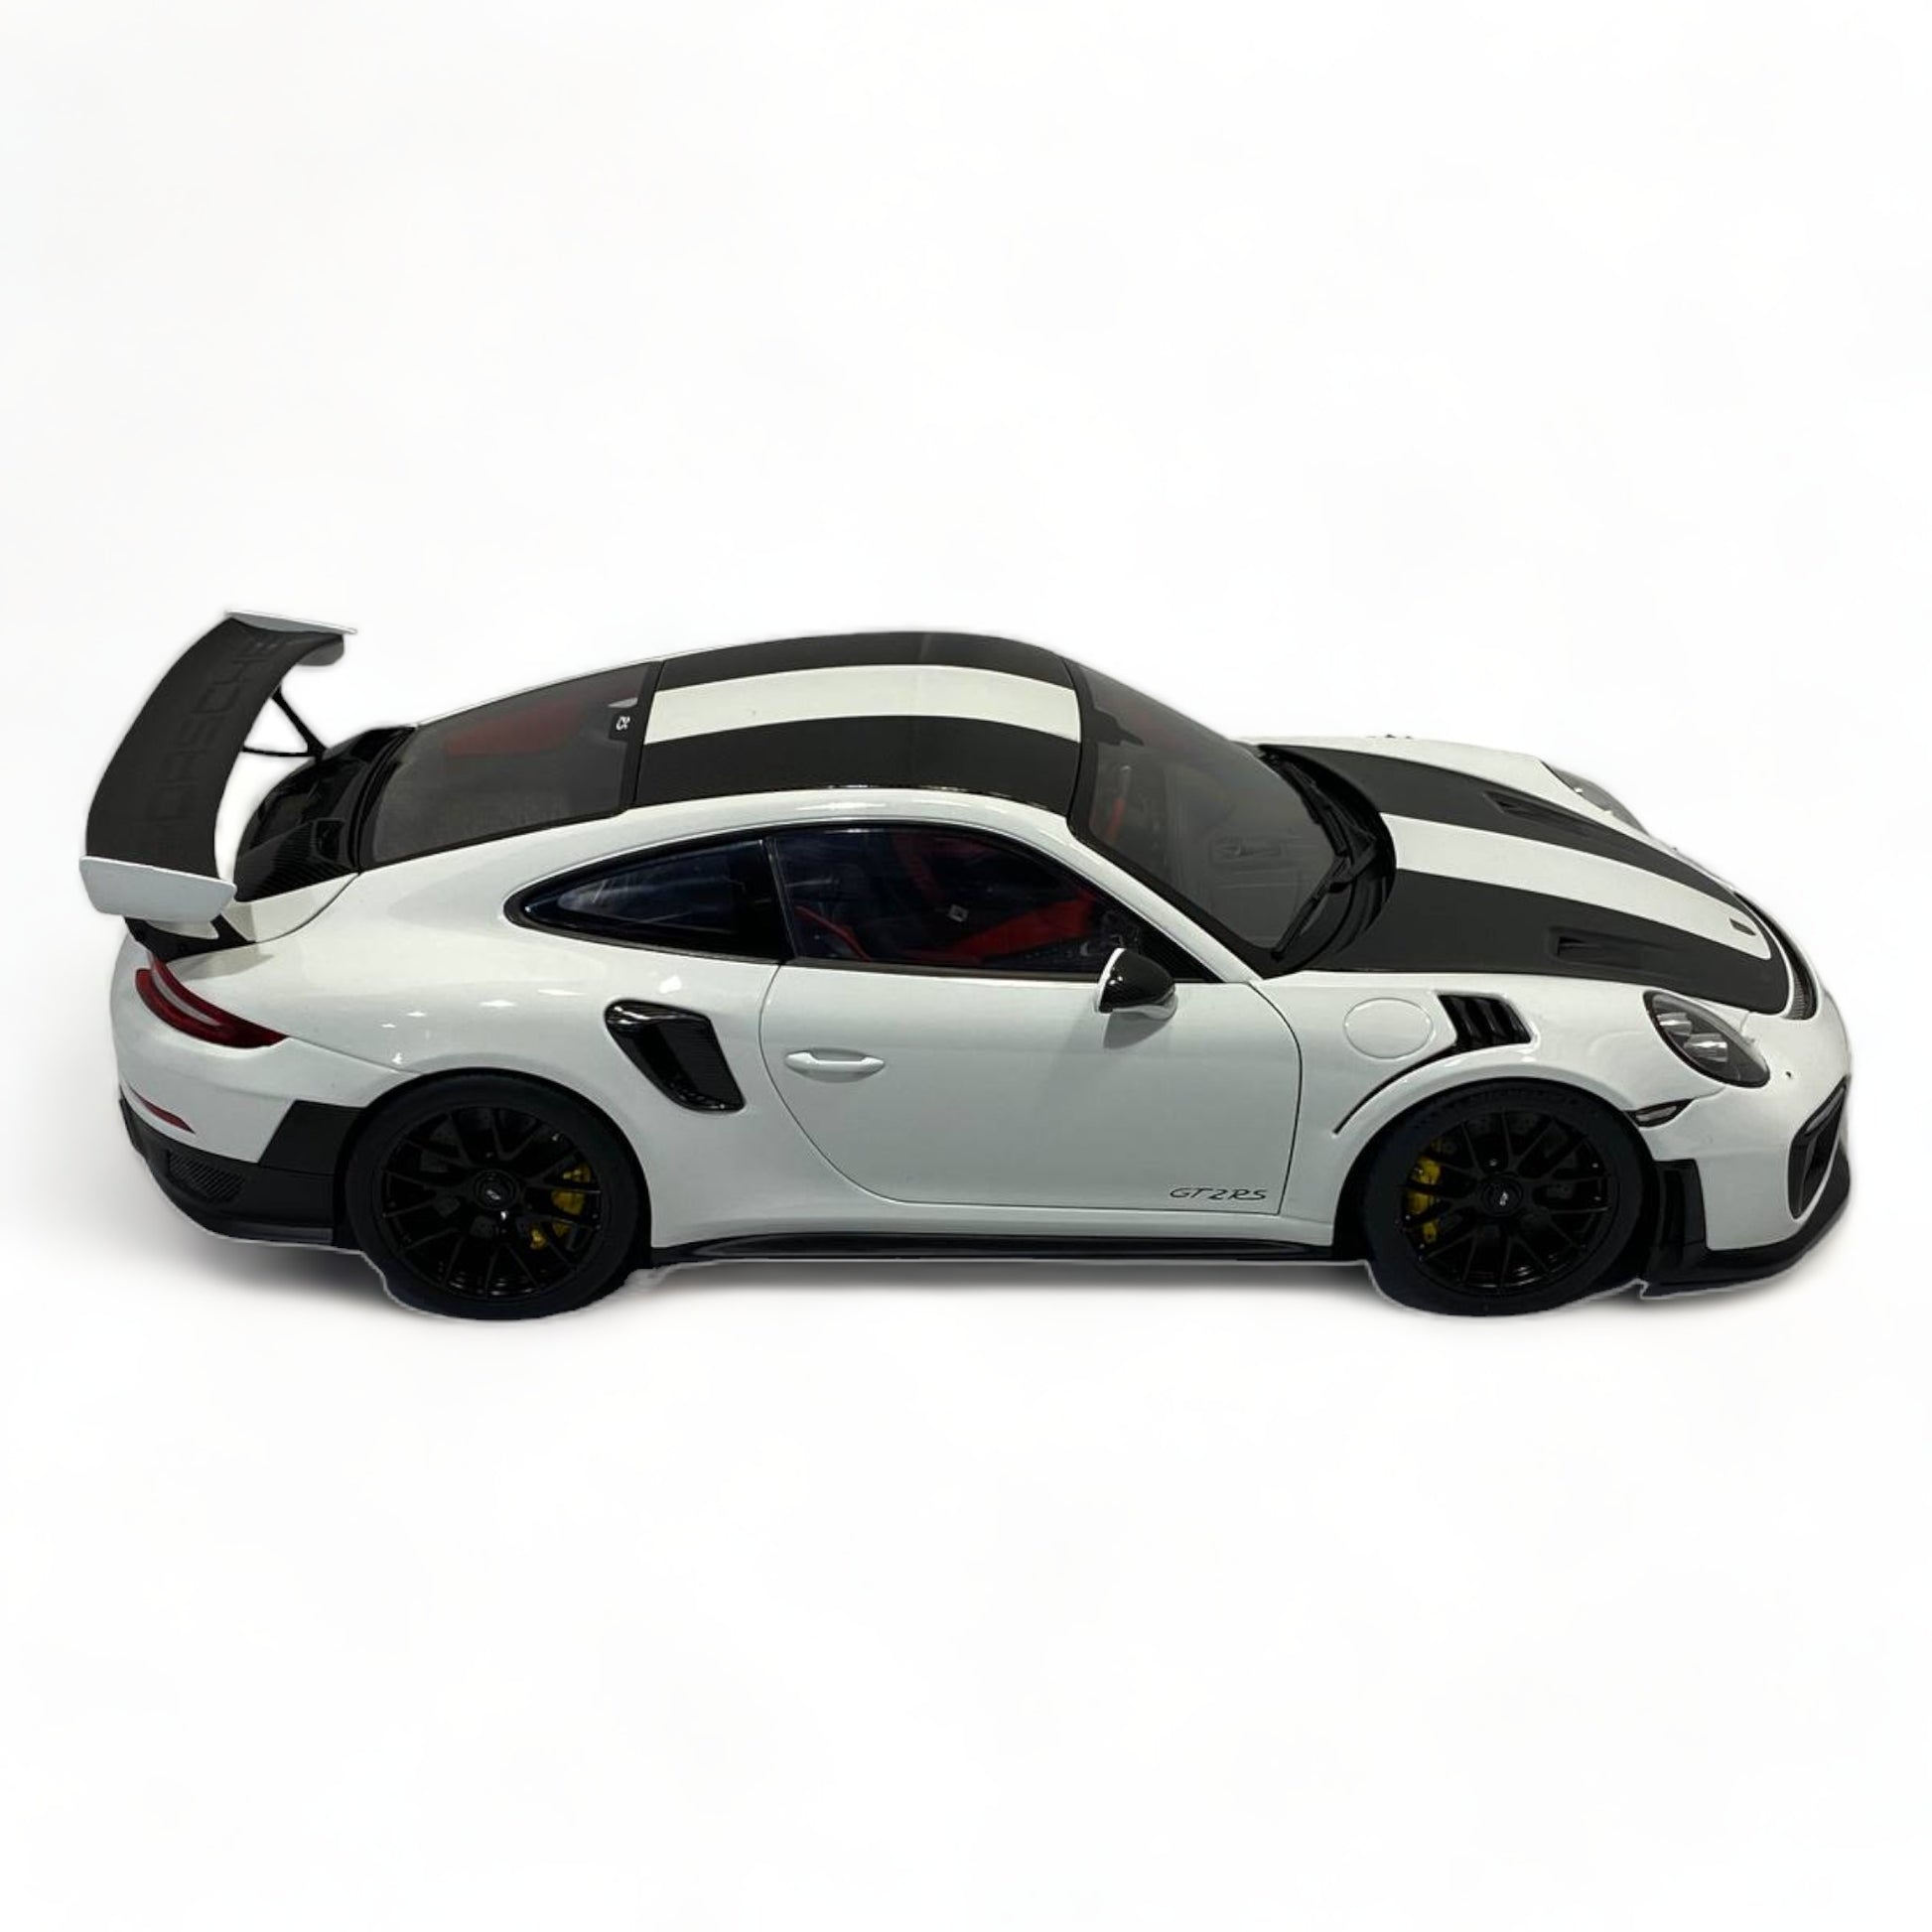 1/18 Diecast Autoart Porsche 911 GT2 RS (991.2) 2017 - White Scale Model Car|Sold in Dturman.com Dubai UAE.